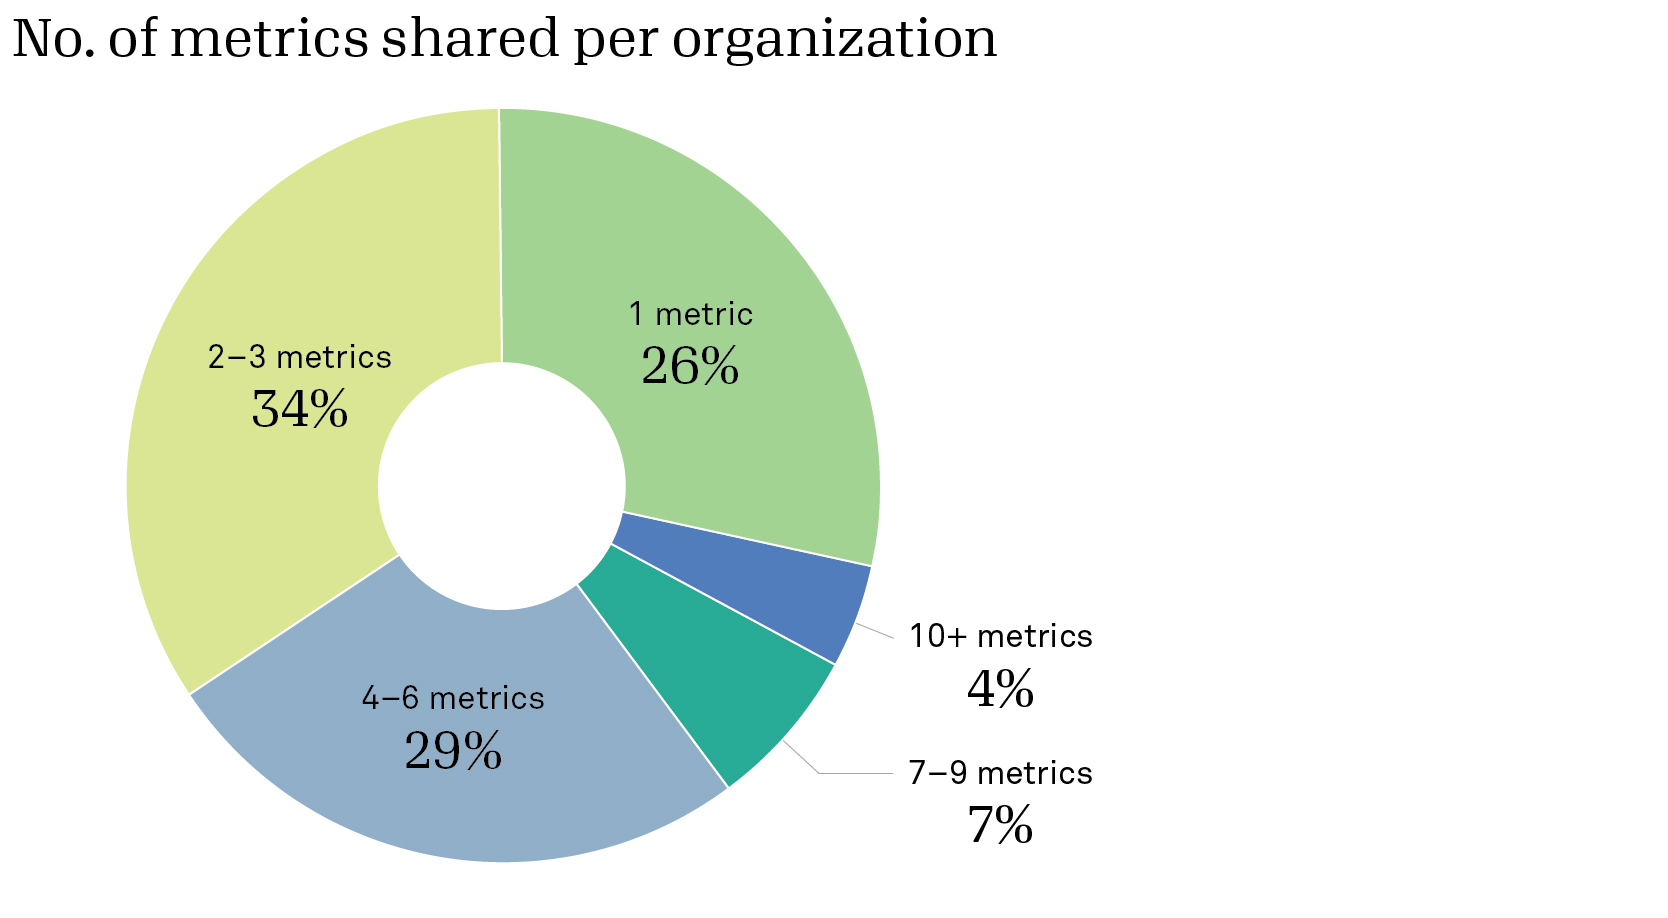 Number of metrics shared per organization